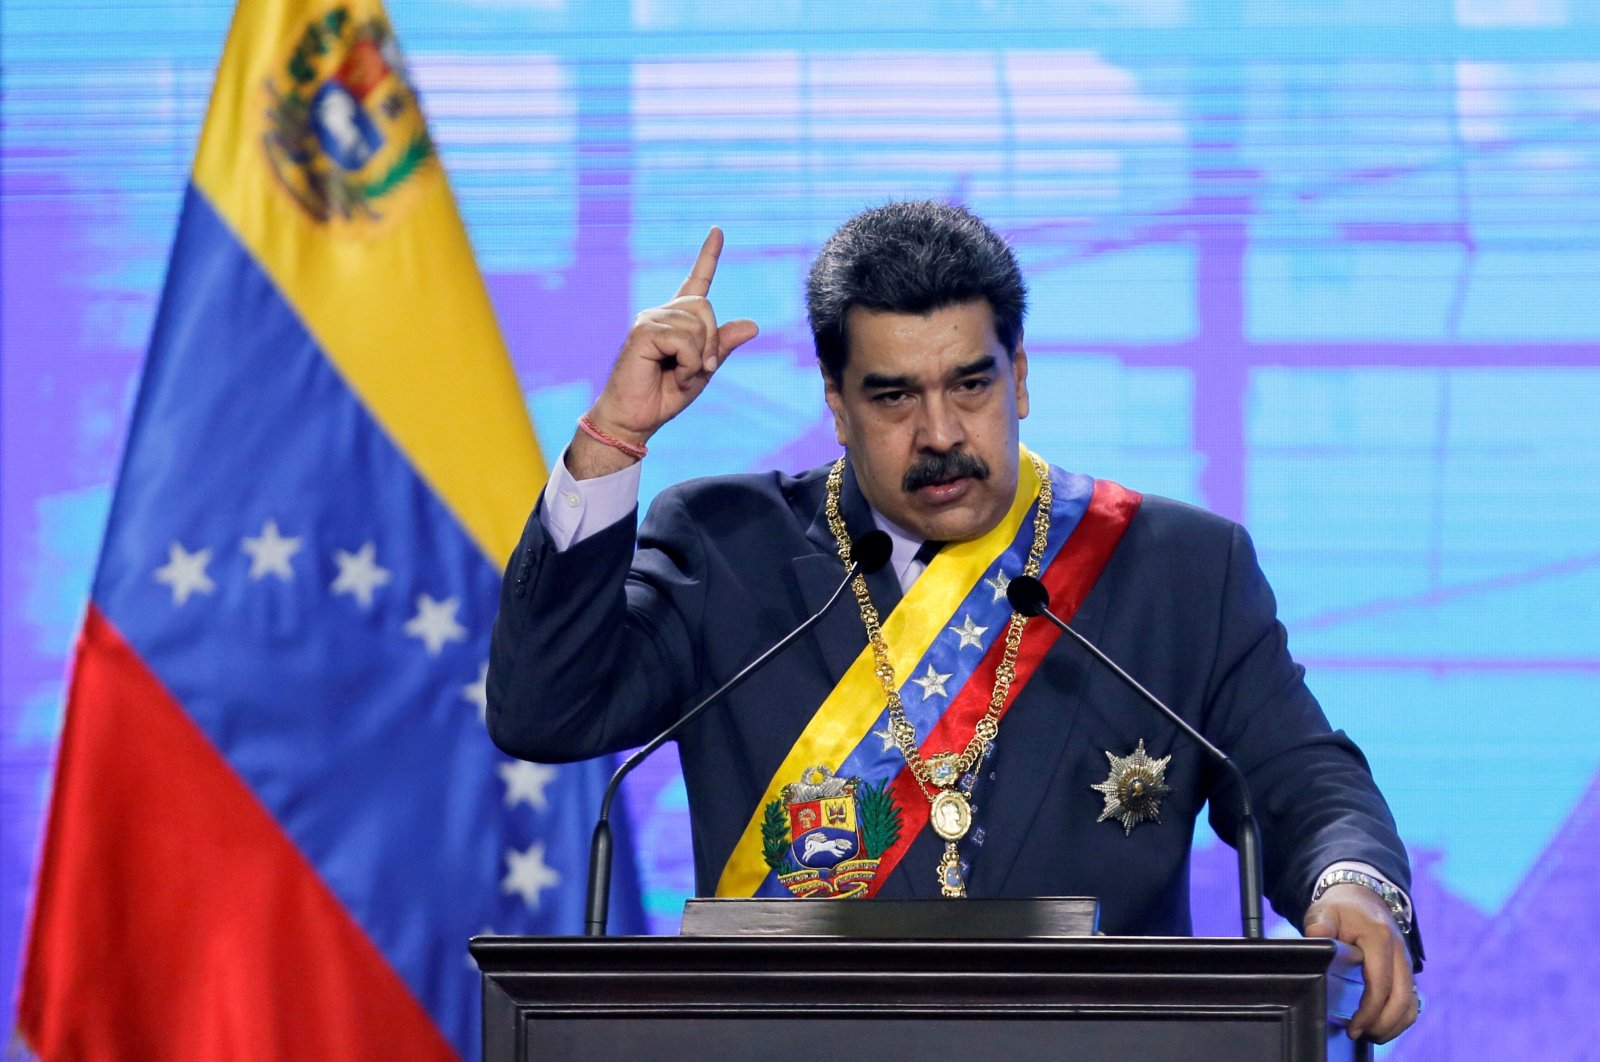 Venezuela's President Nicolas Maduro speaks during a ceremony in Caracas, Venezuela, Jan. 22, 2021. (Reuters Photo)